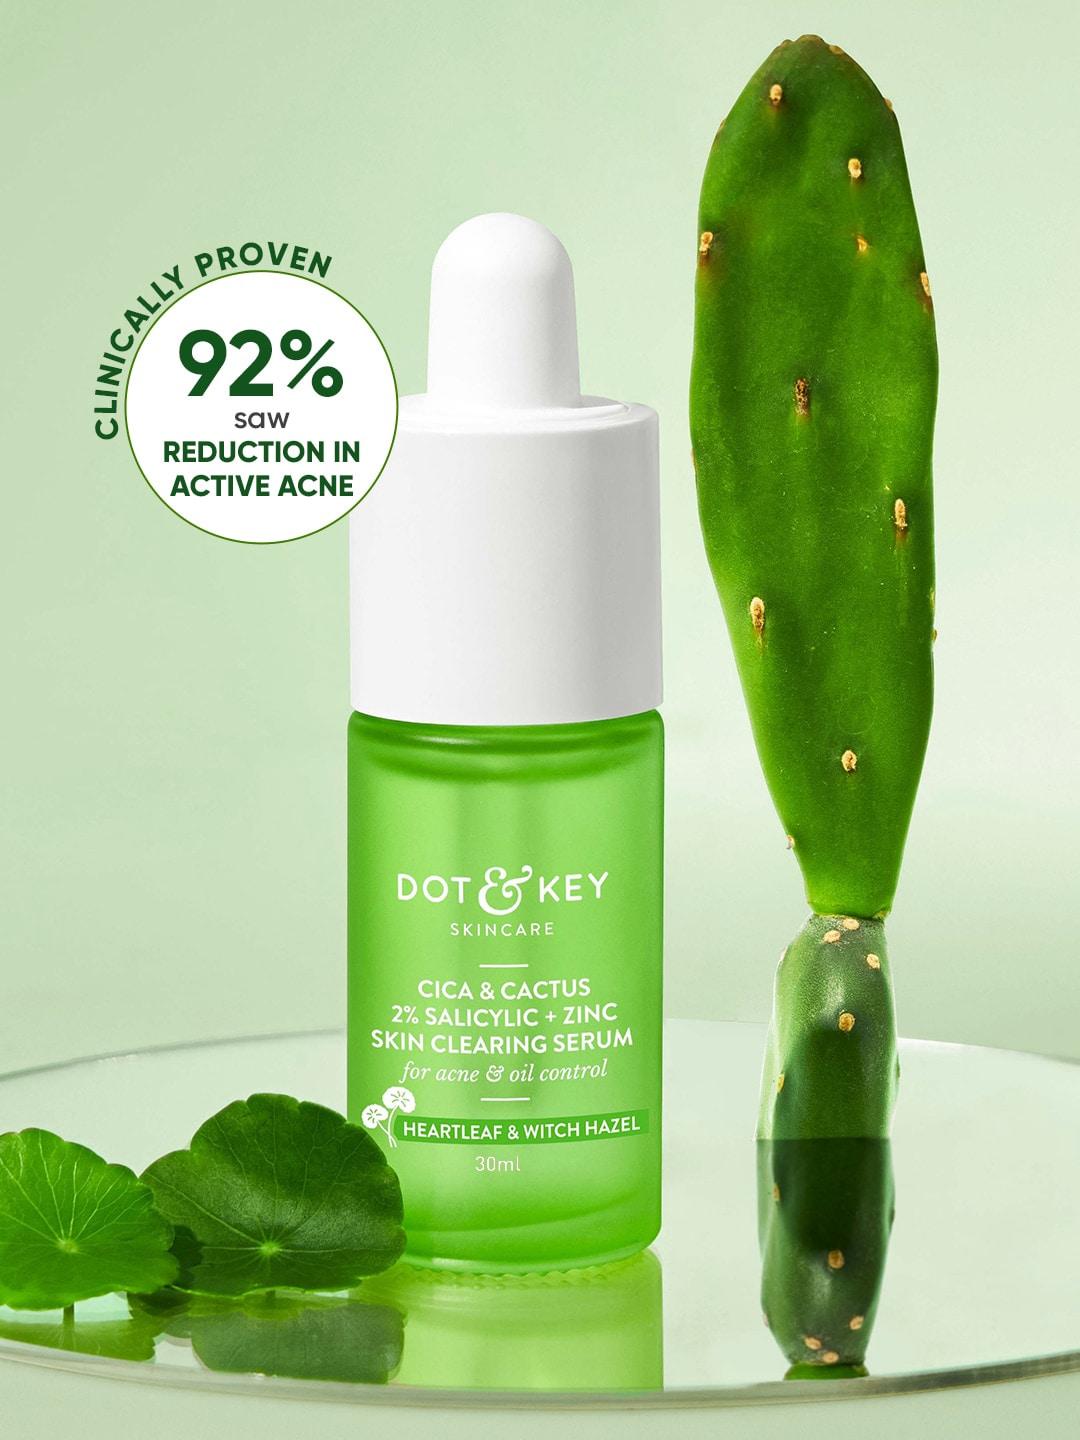 dot & key cica & cactus 2% salicyclic + zinc skin clearing serum 30 ml